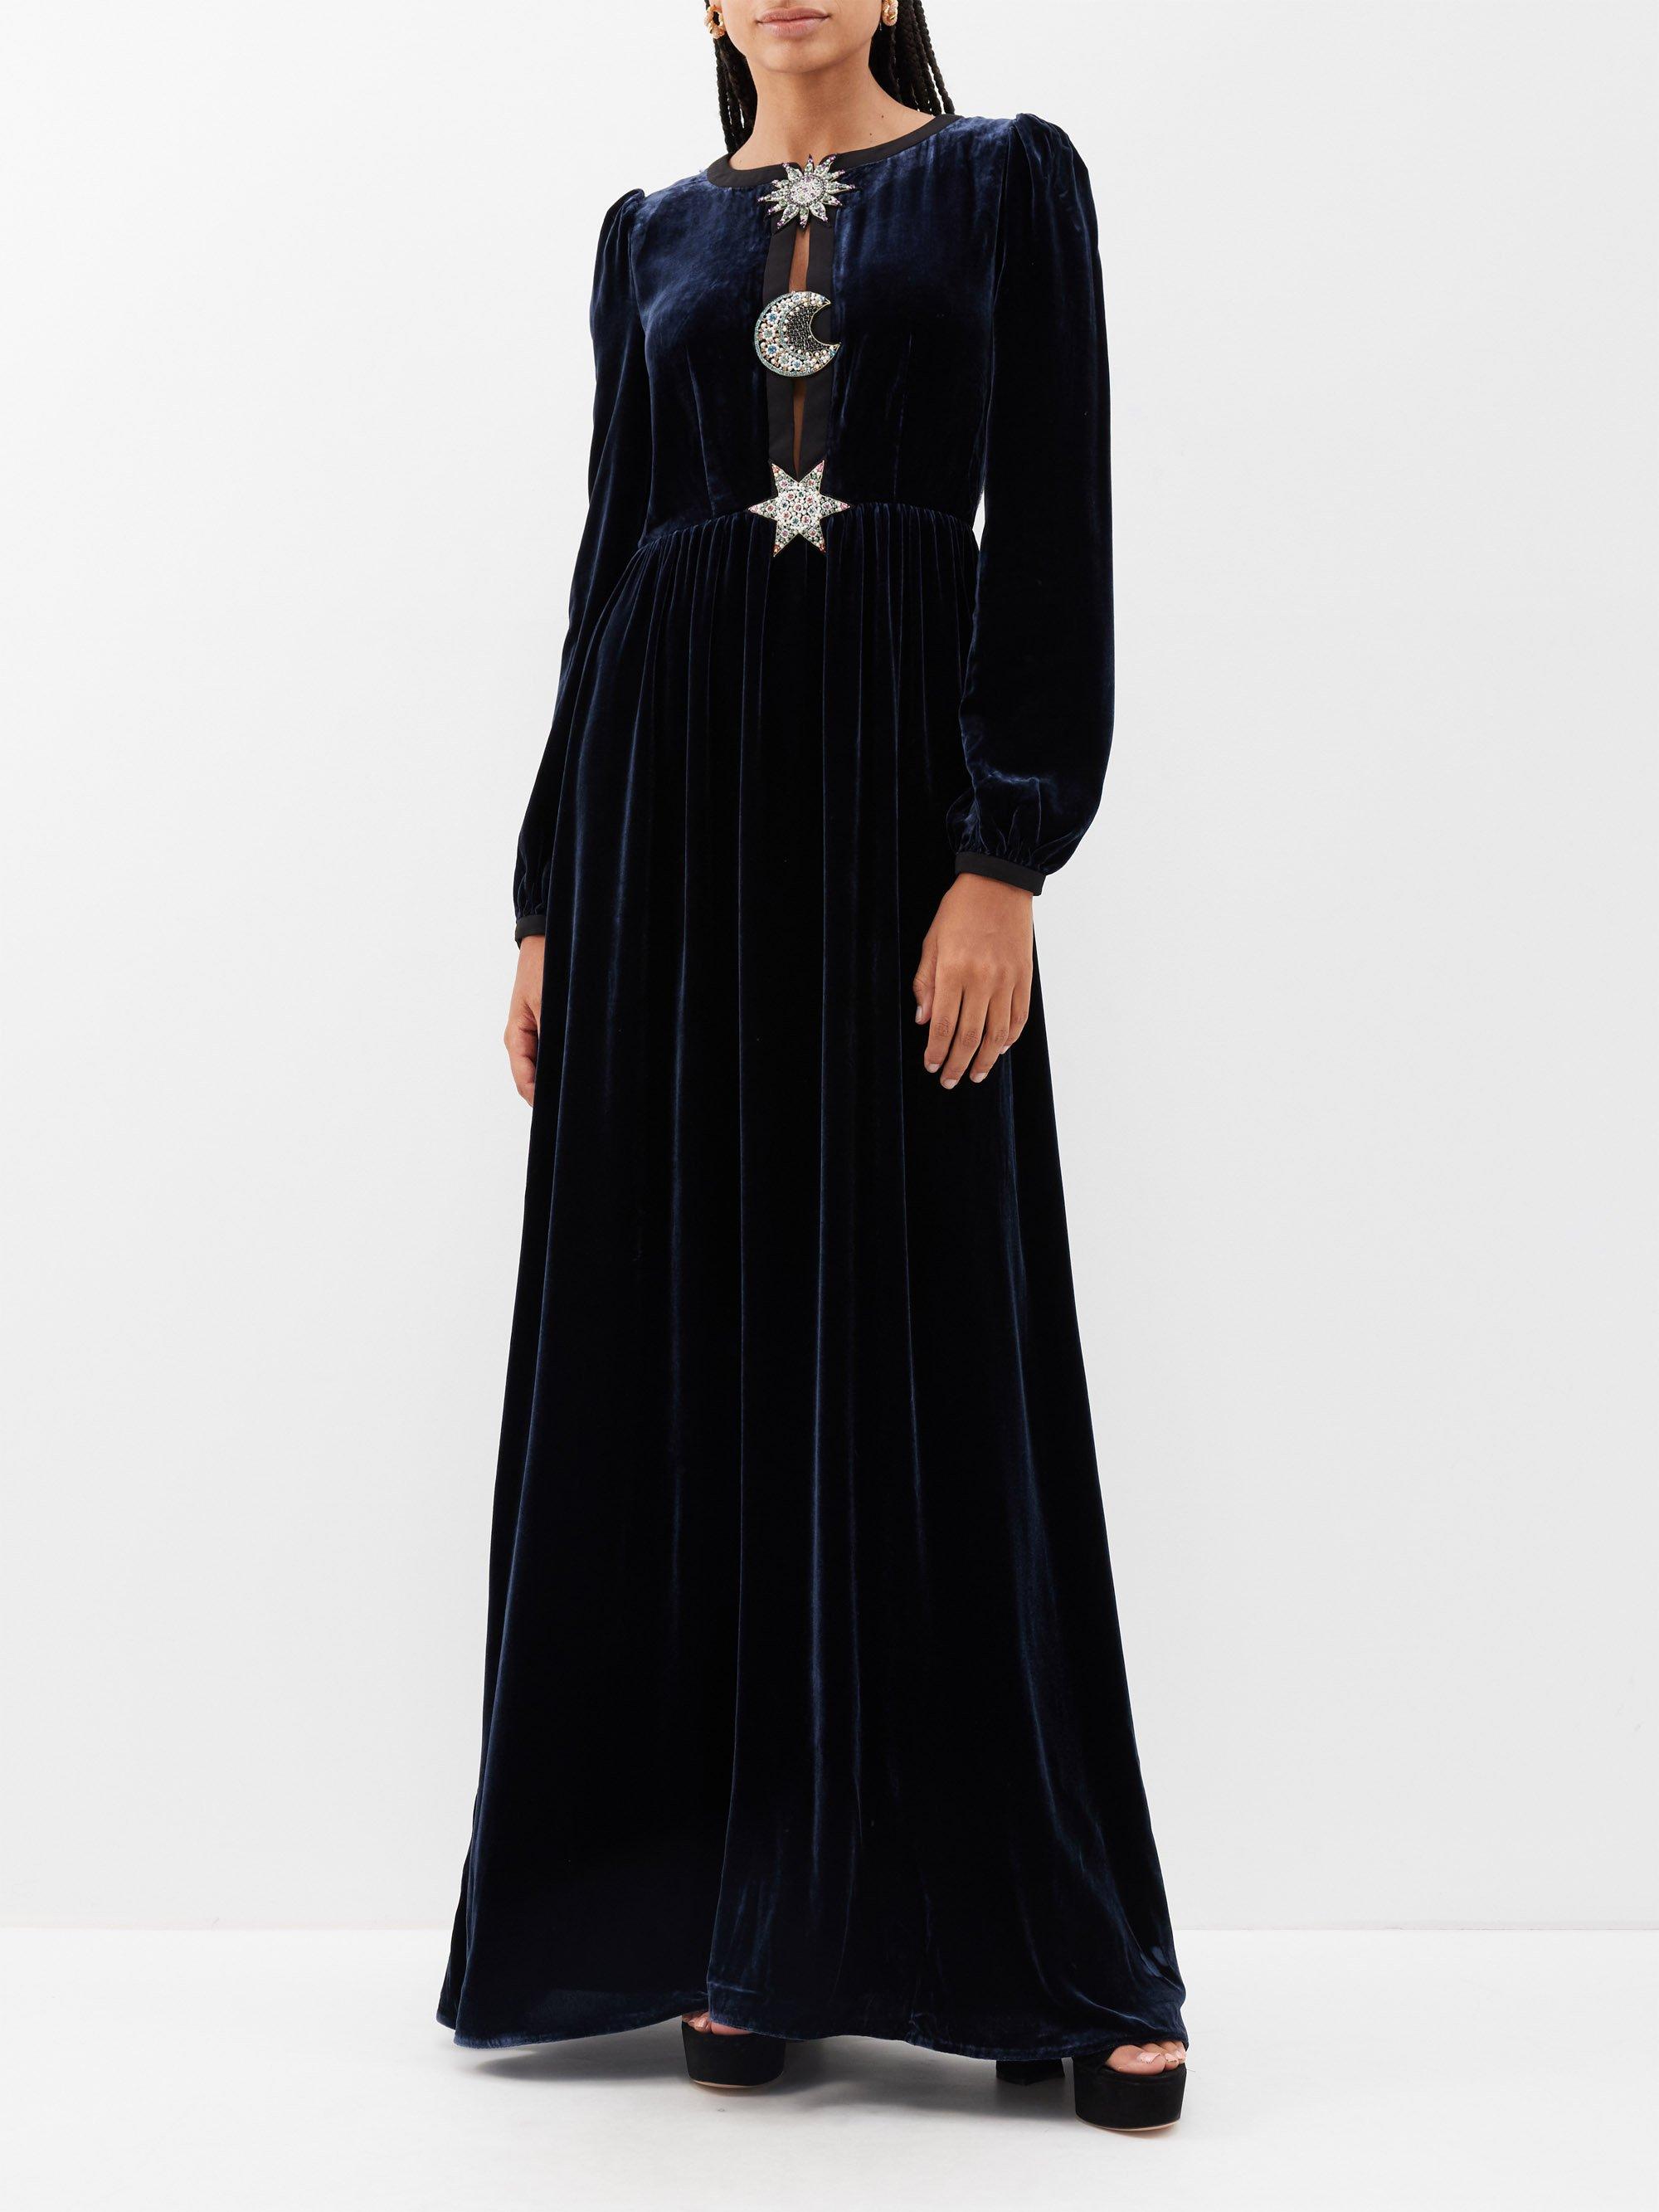 Art Deco Brooch | Dress Gown Coat | Brooch Women | Pins - Style Brooch Pins  Women Dress - Aliexpress